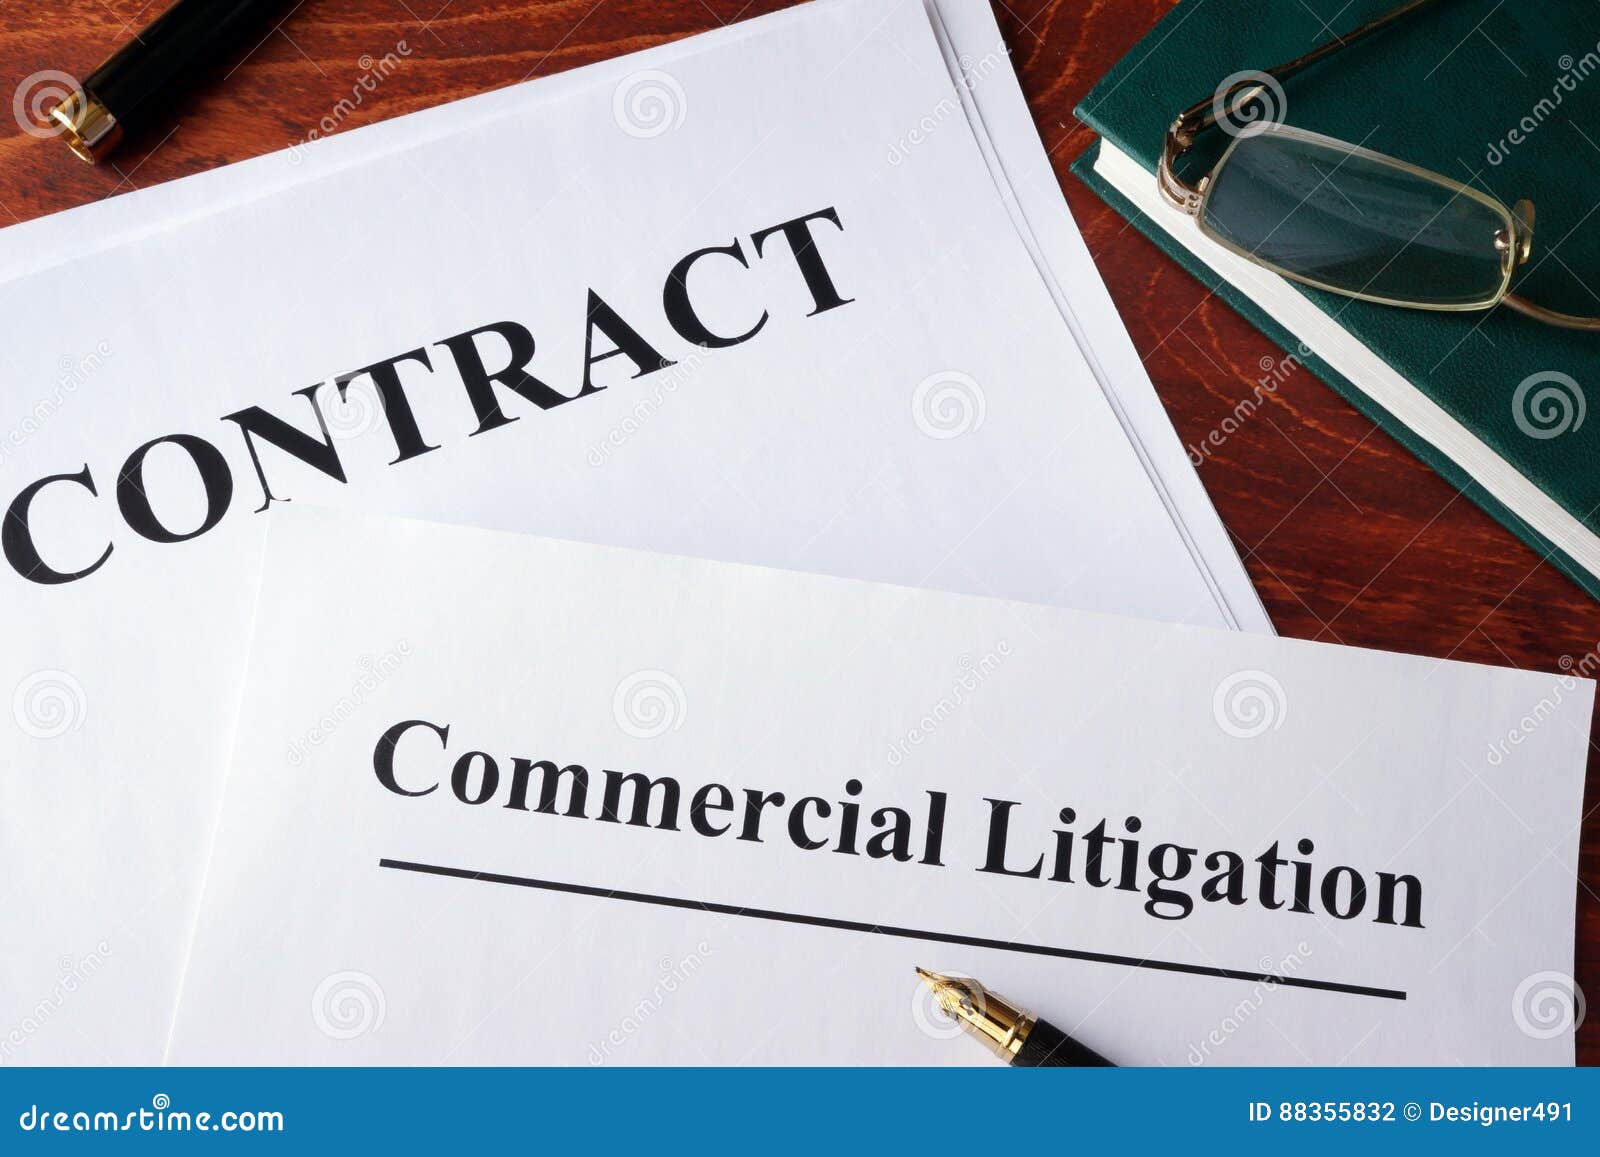 commercial litigation form.